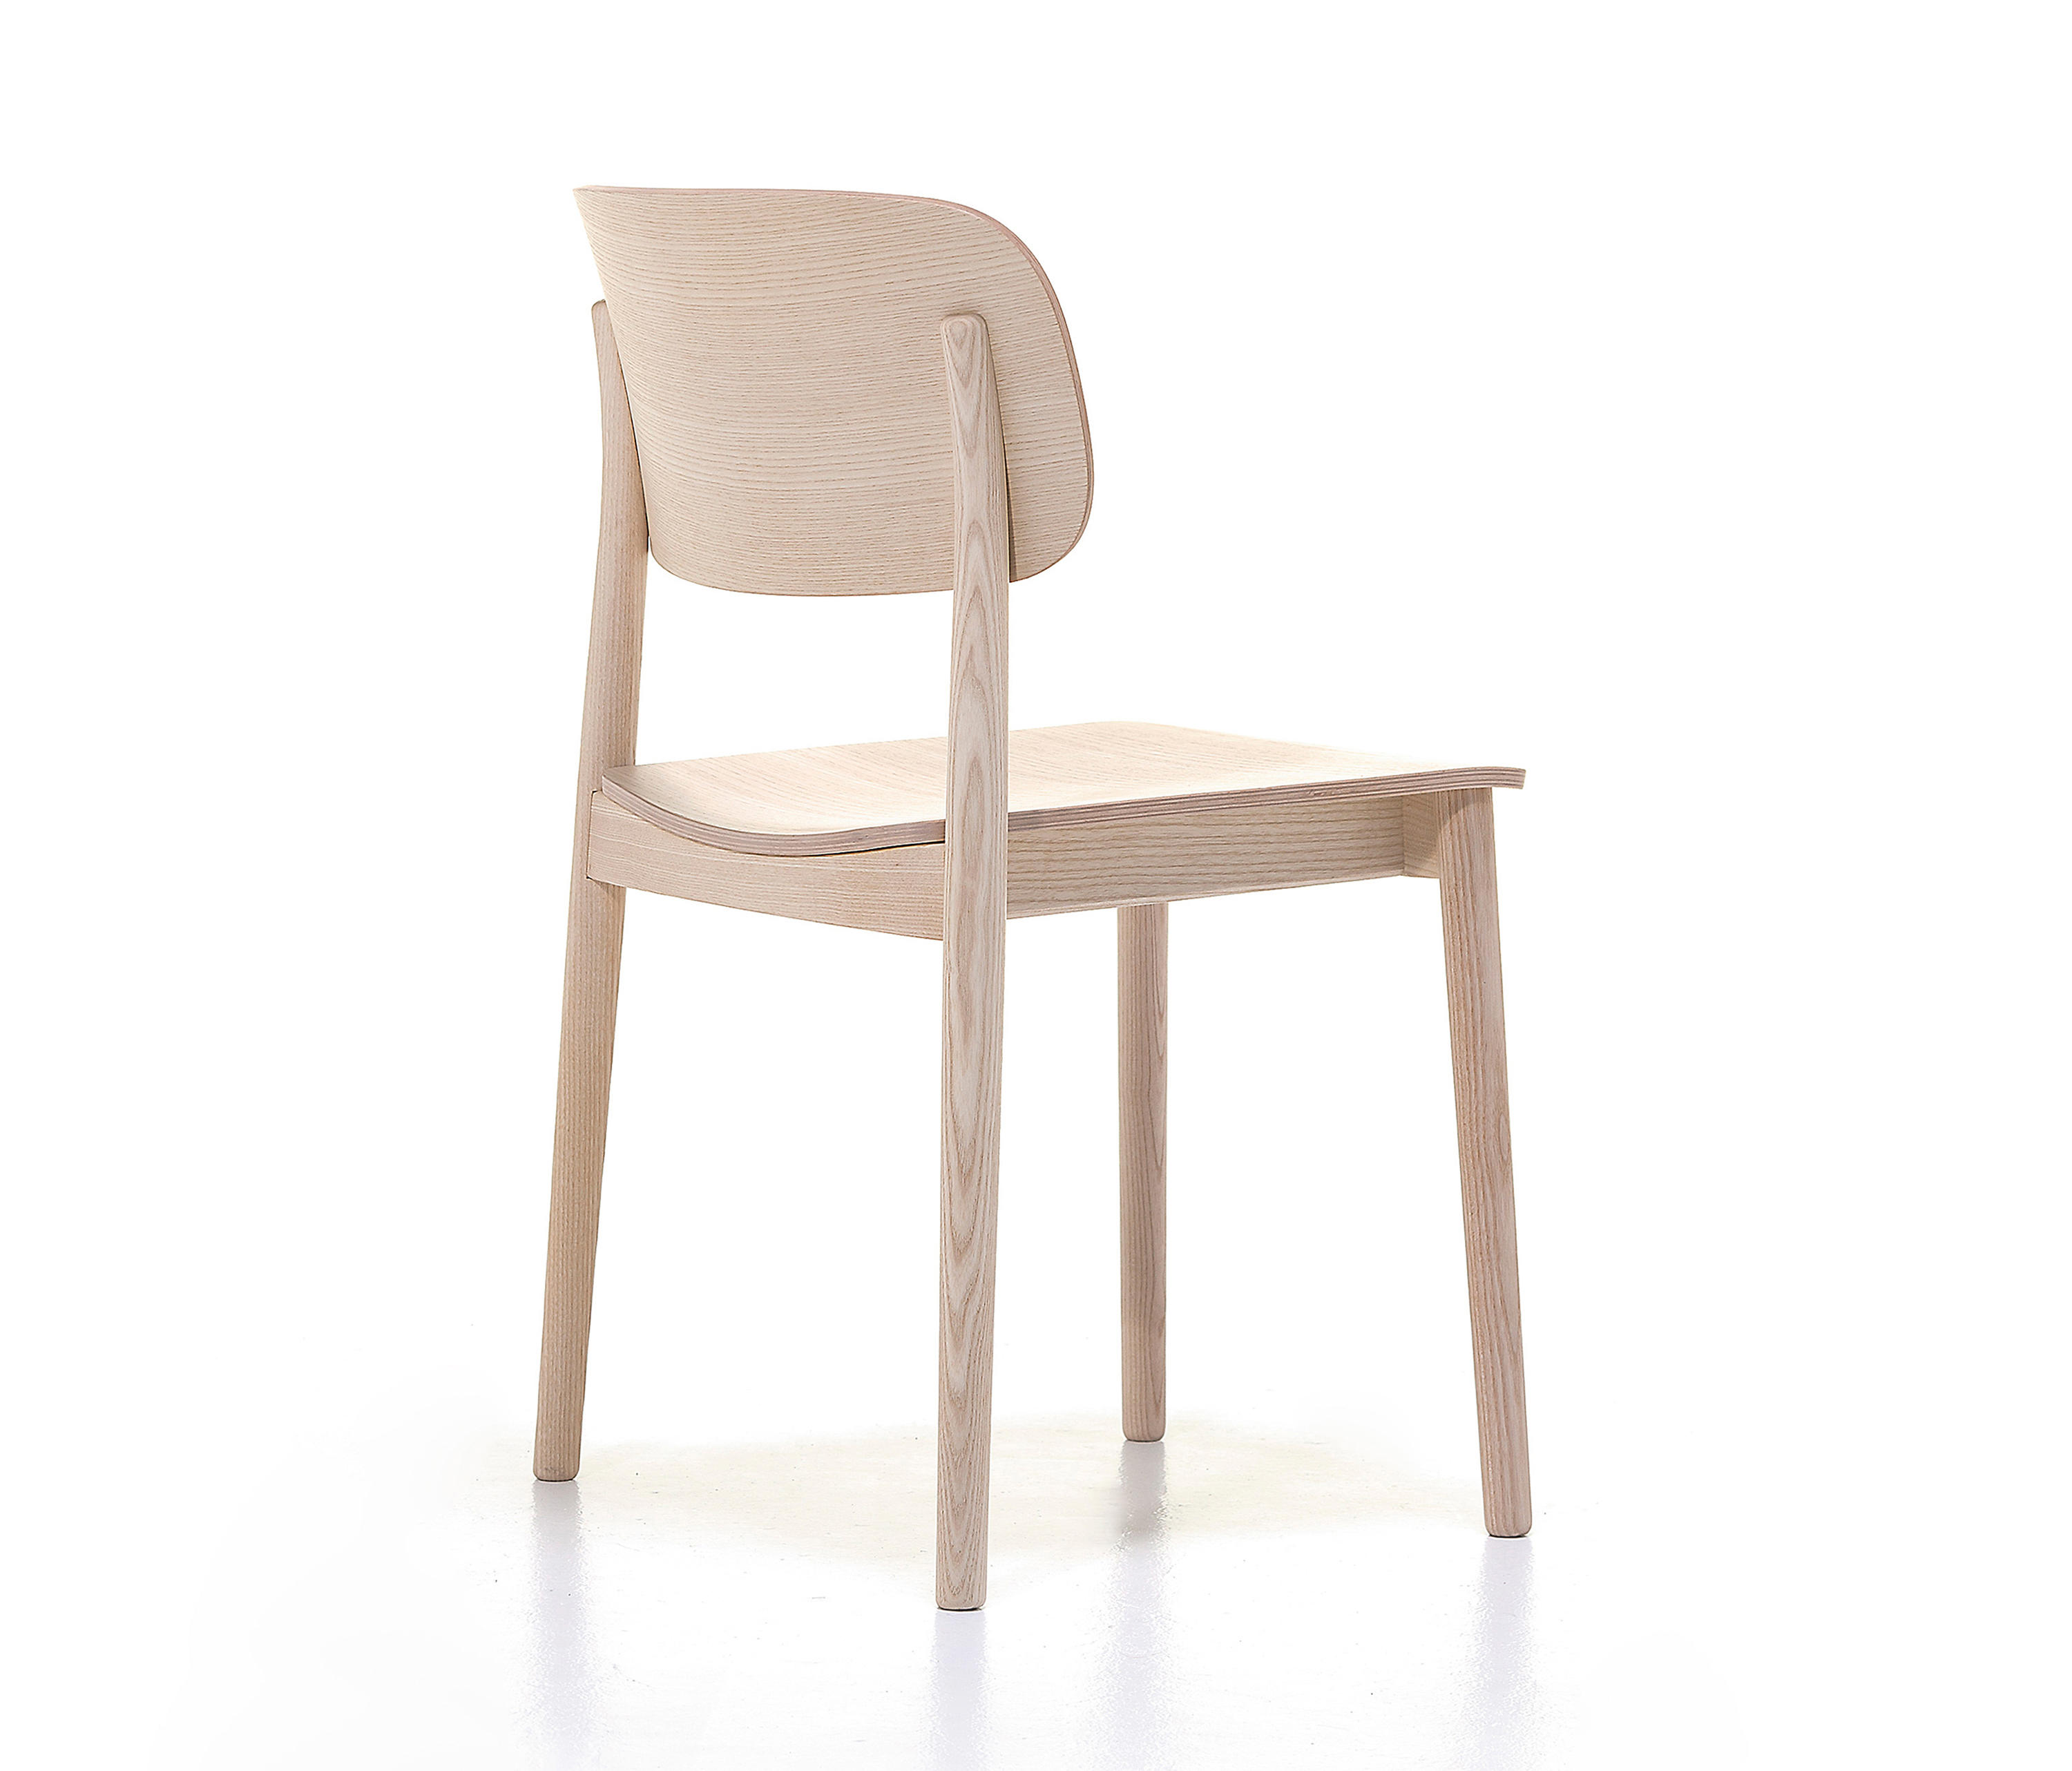 GRADO - Chairs from Cizeta | L’Abbate | Architonic